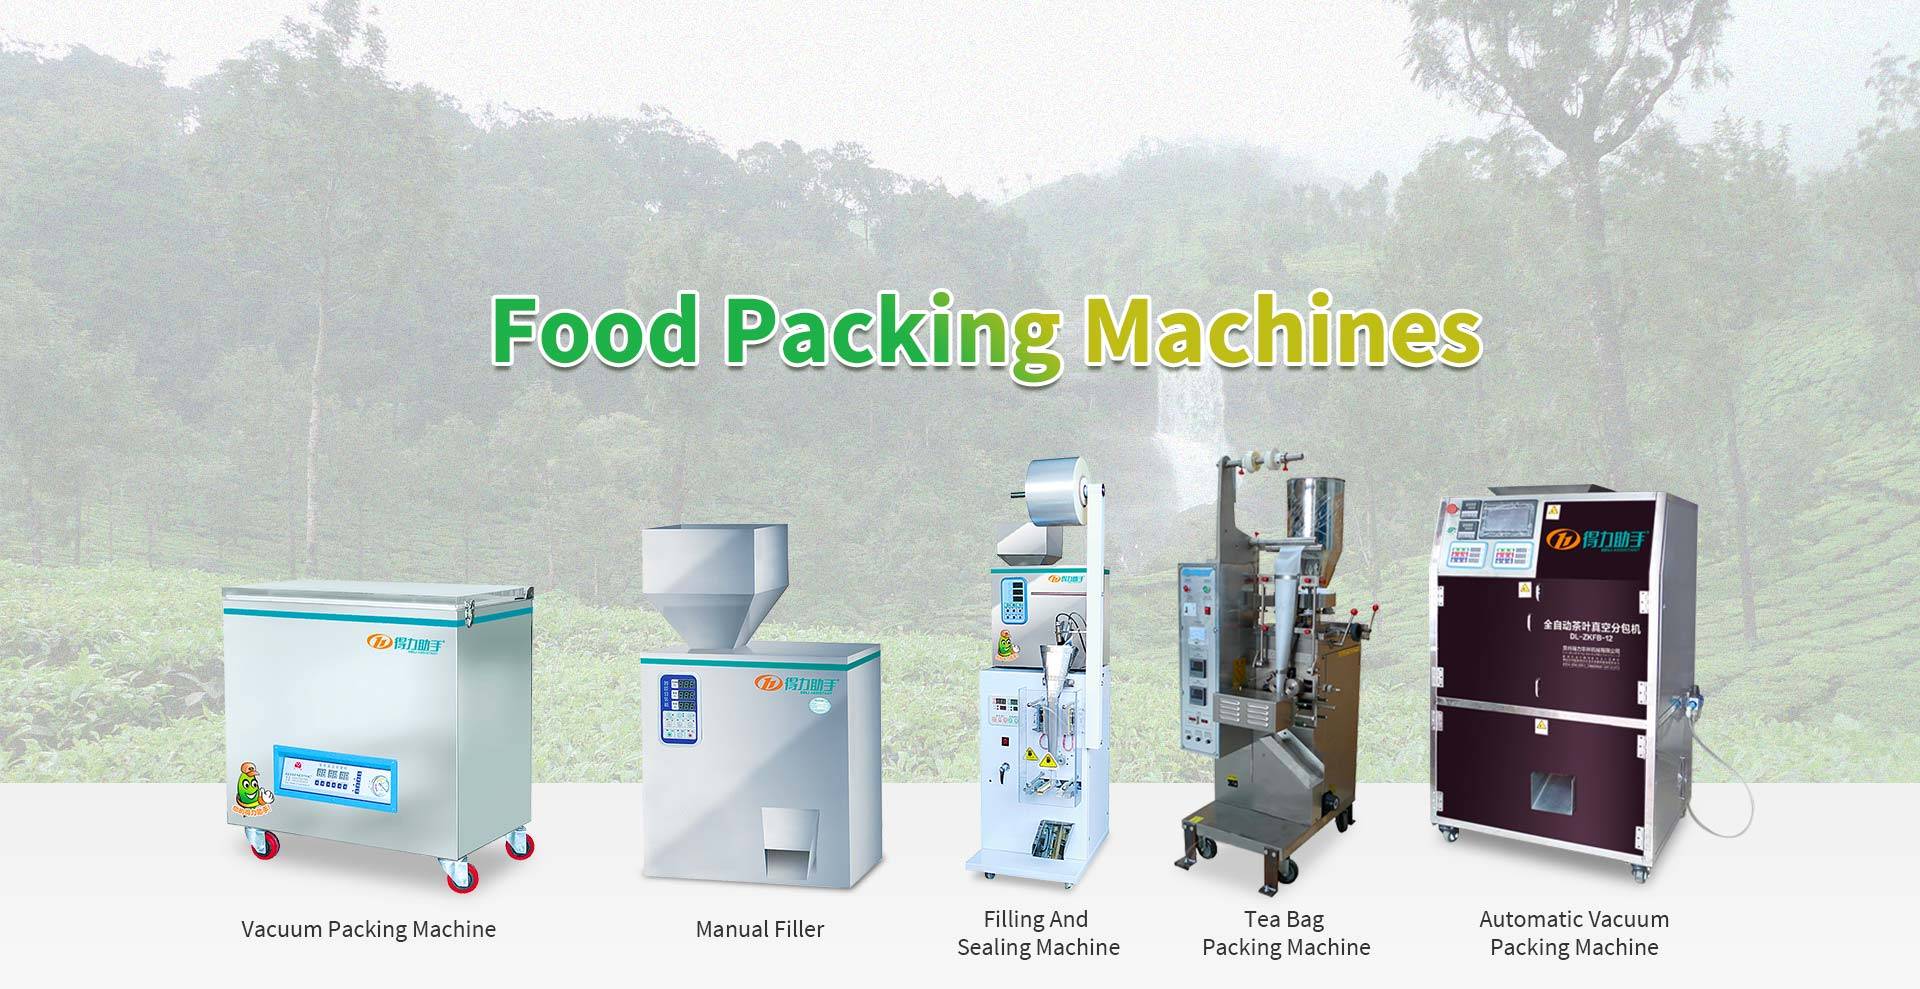 Food Packing Machines